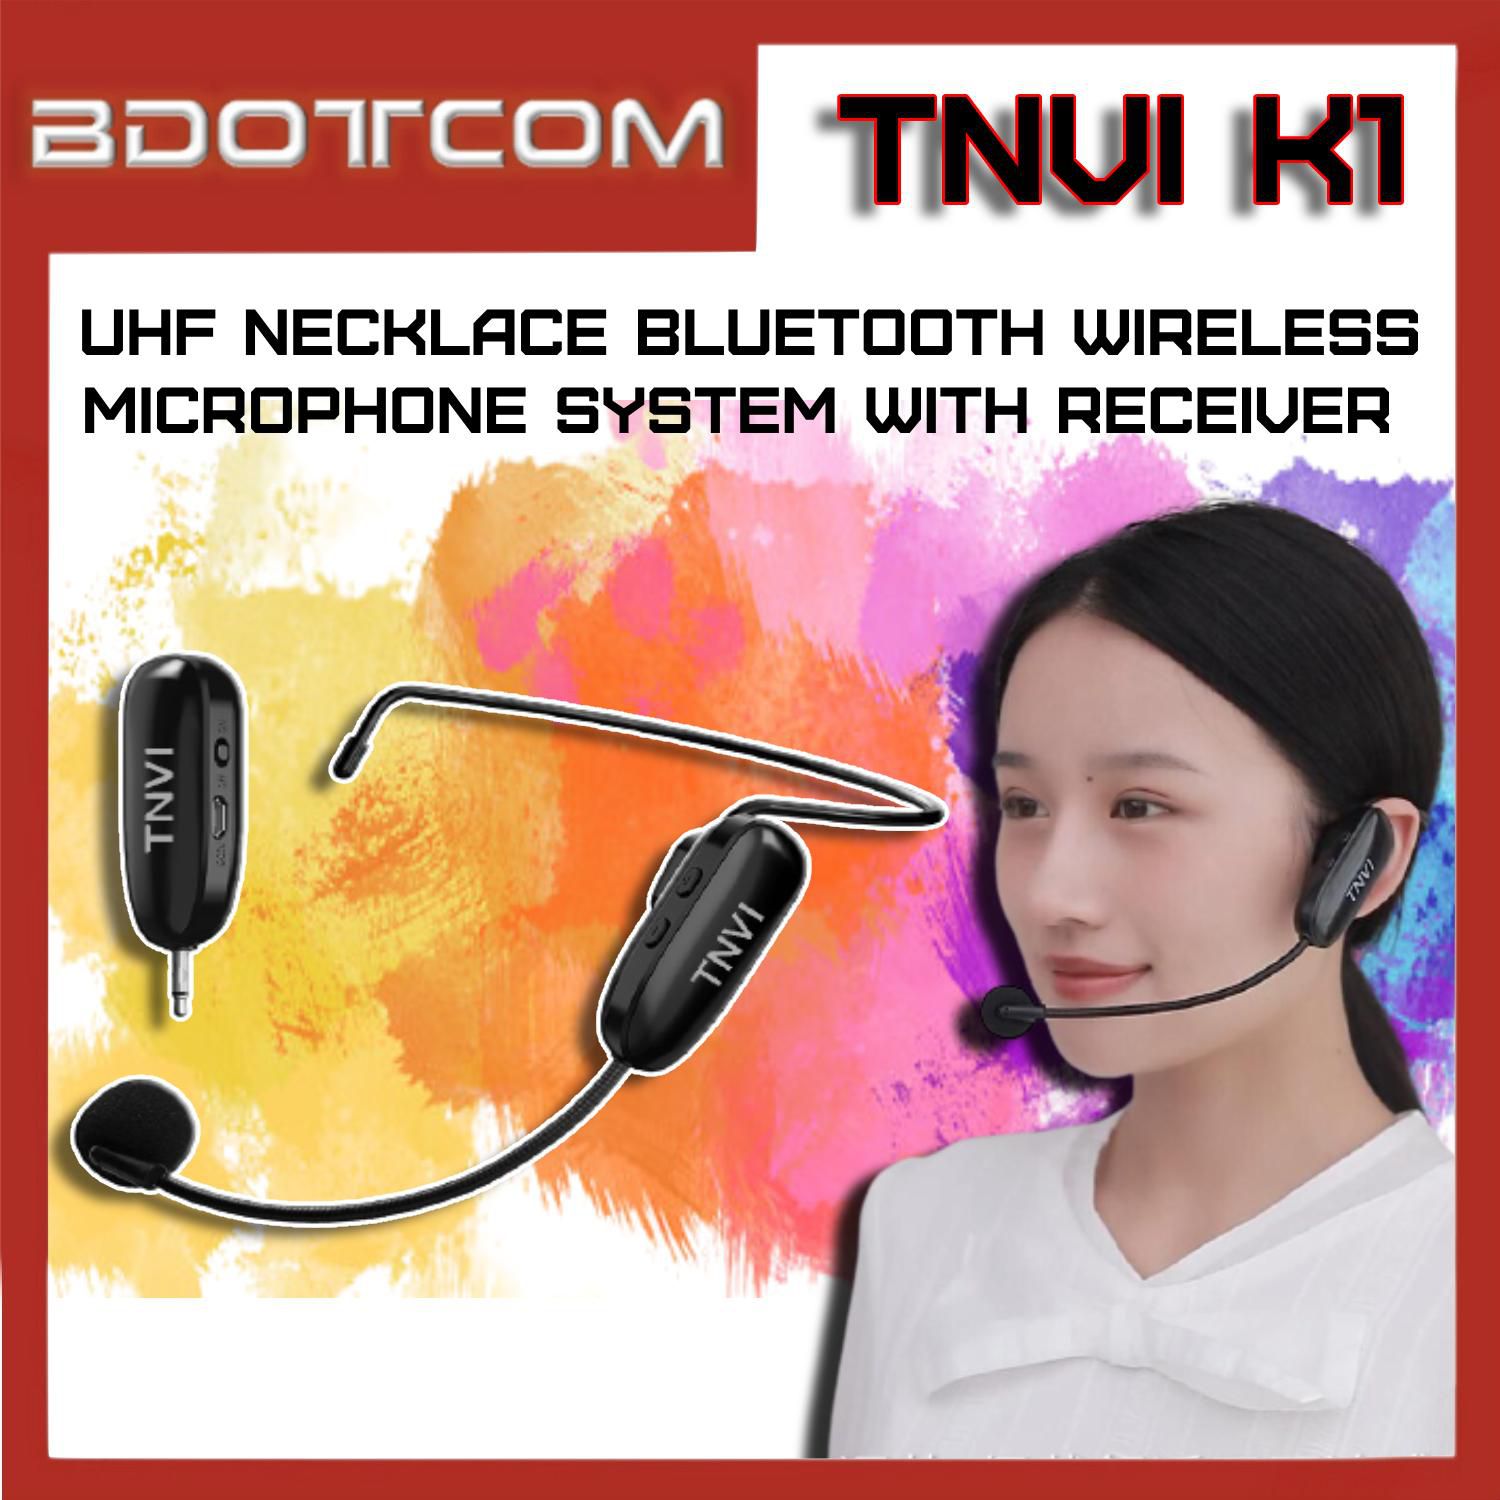 TNVI K1 [READY STOCK] 2.4G UHF Necklace Bluetooth Wireless Microphone System